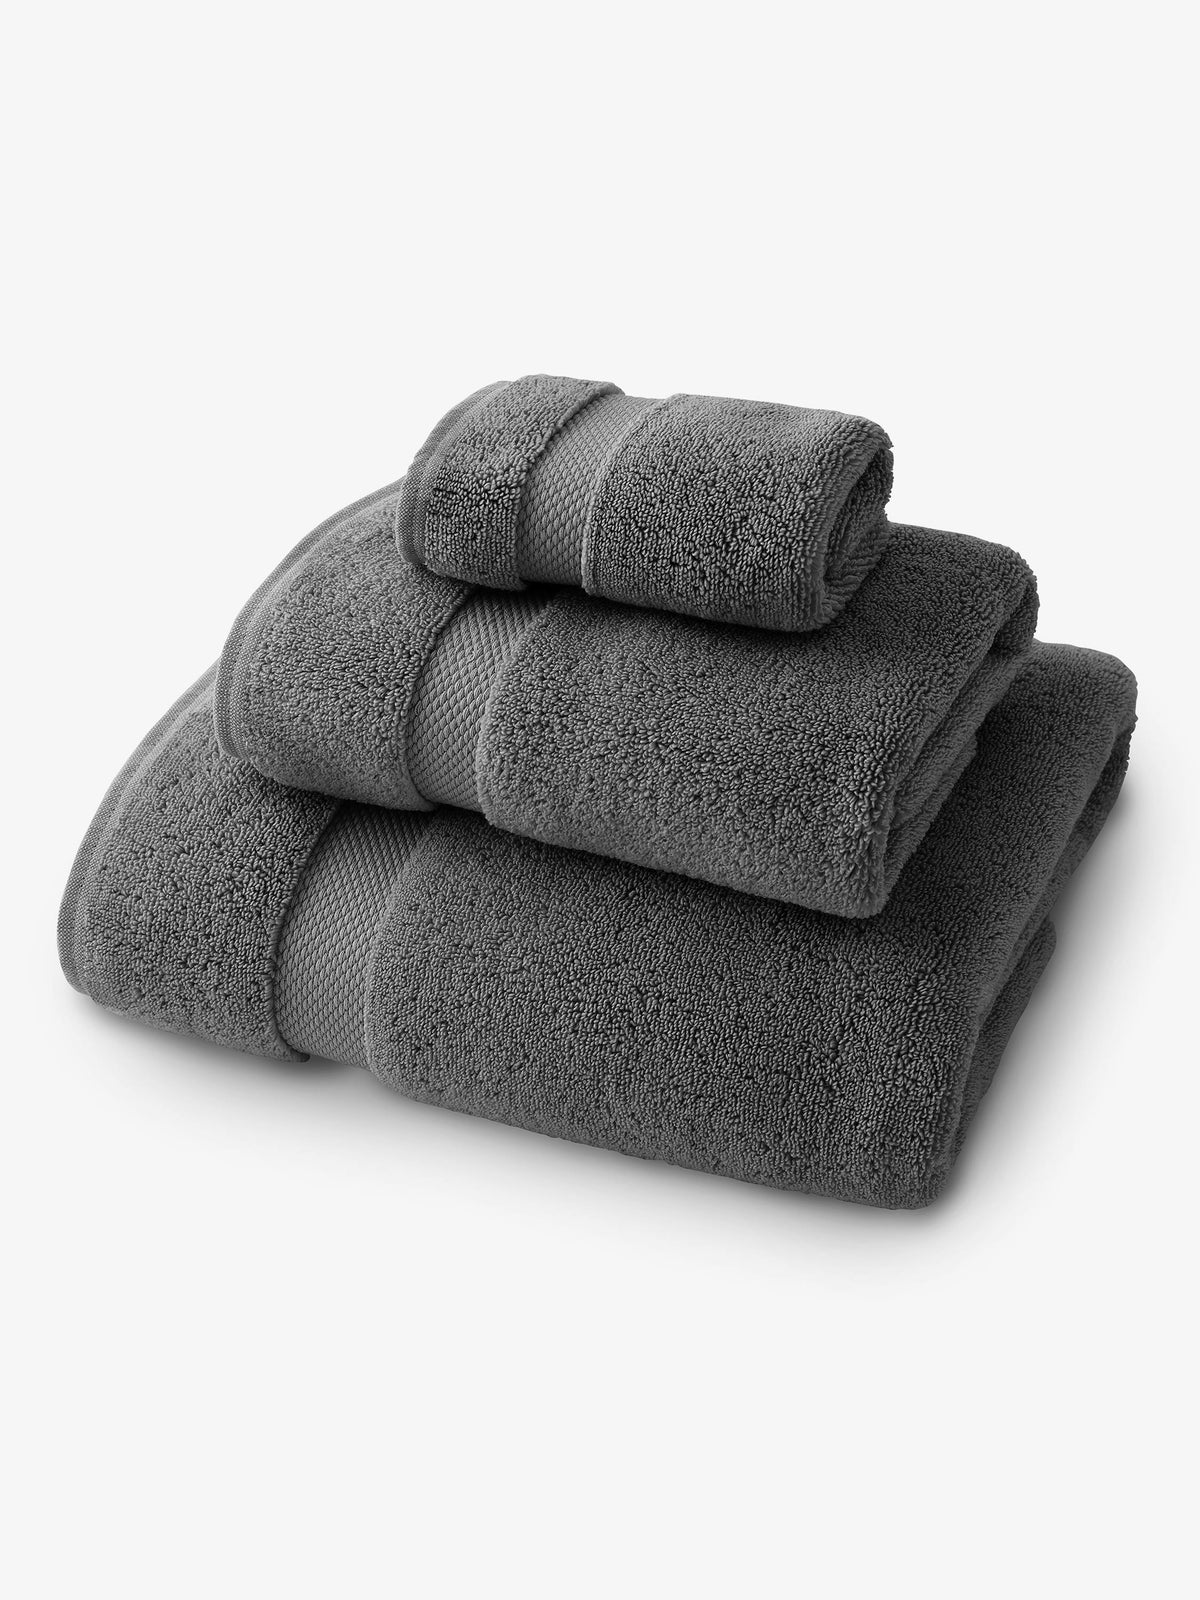 Boma Kitchen Towel - Black + Stone Gray — Lotus Bleu Design